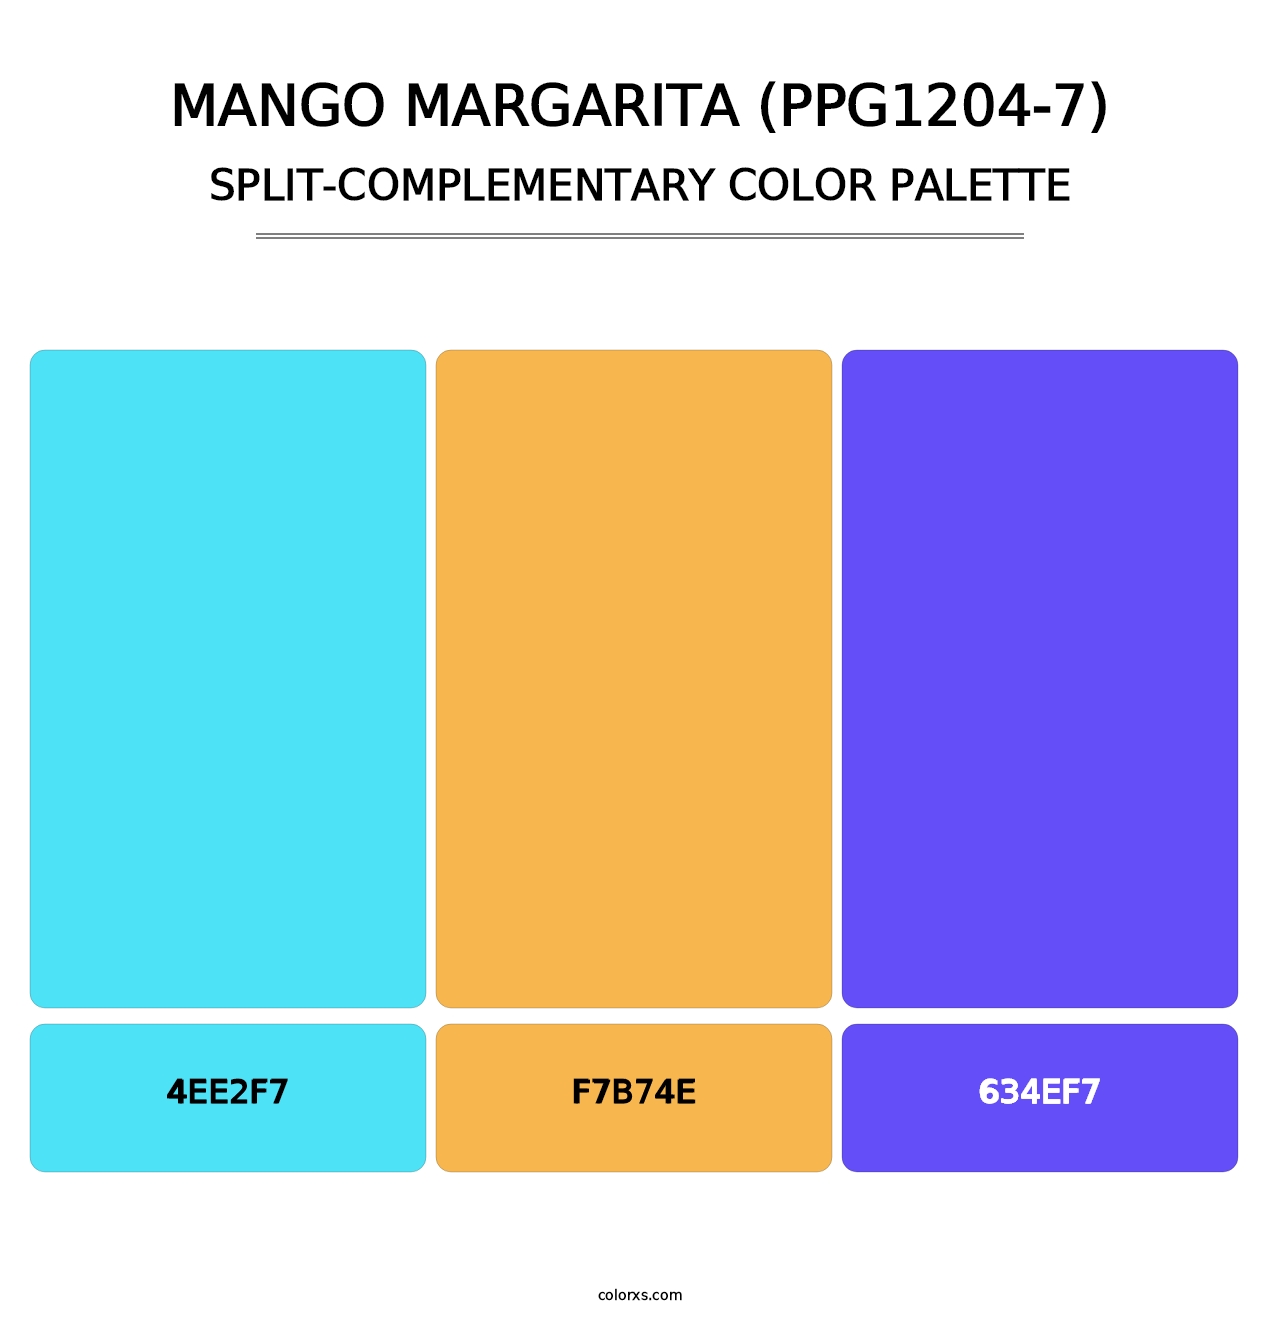 Mango Margarita (PPG1204-7) - Split-Complementary Color Palette